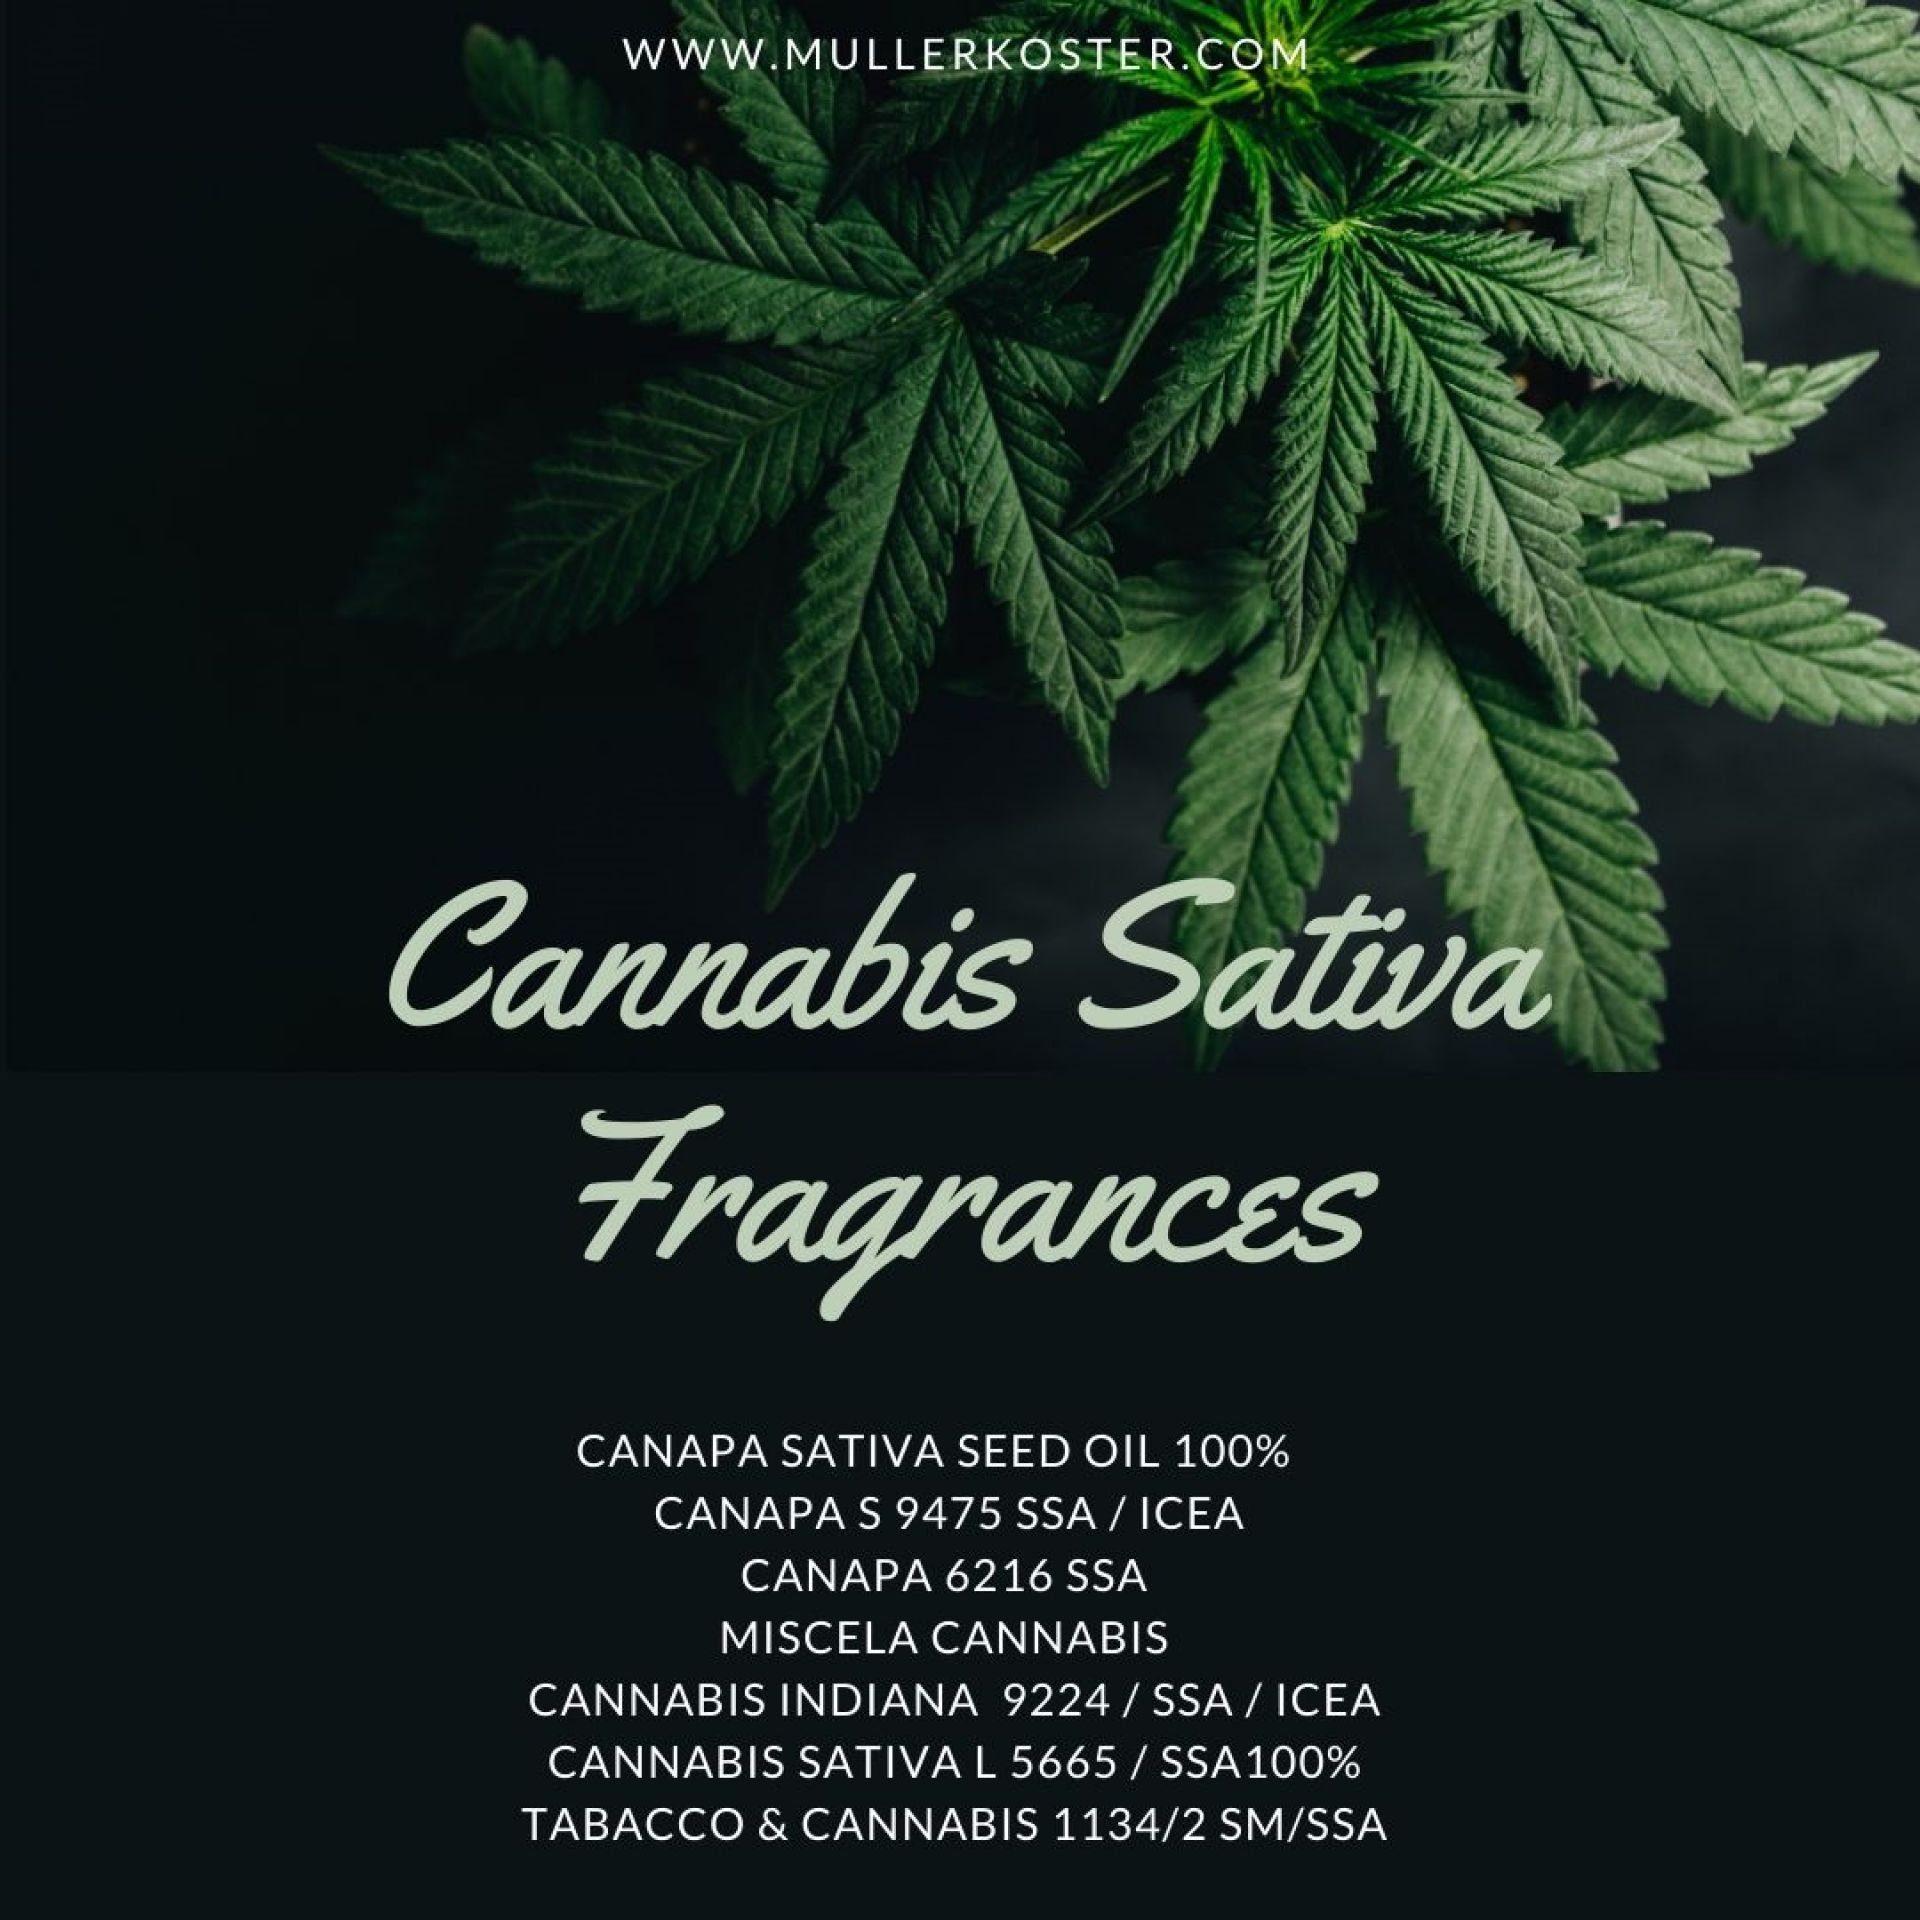 Cannabis Sativa Fragrances